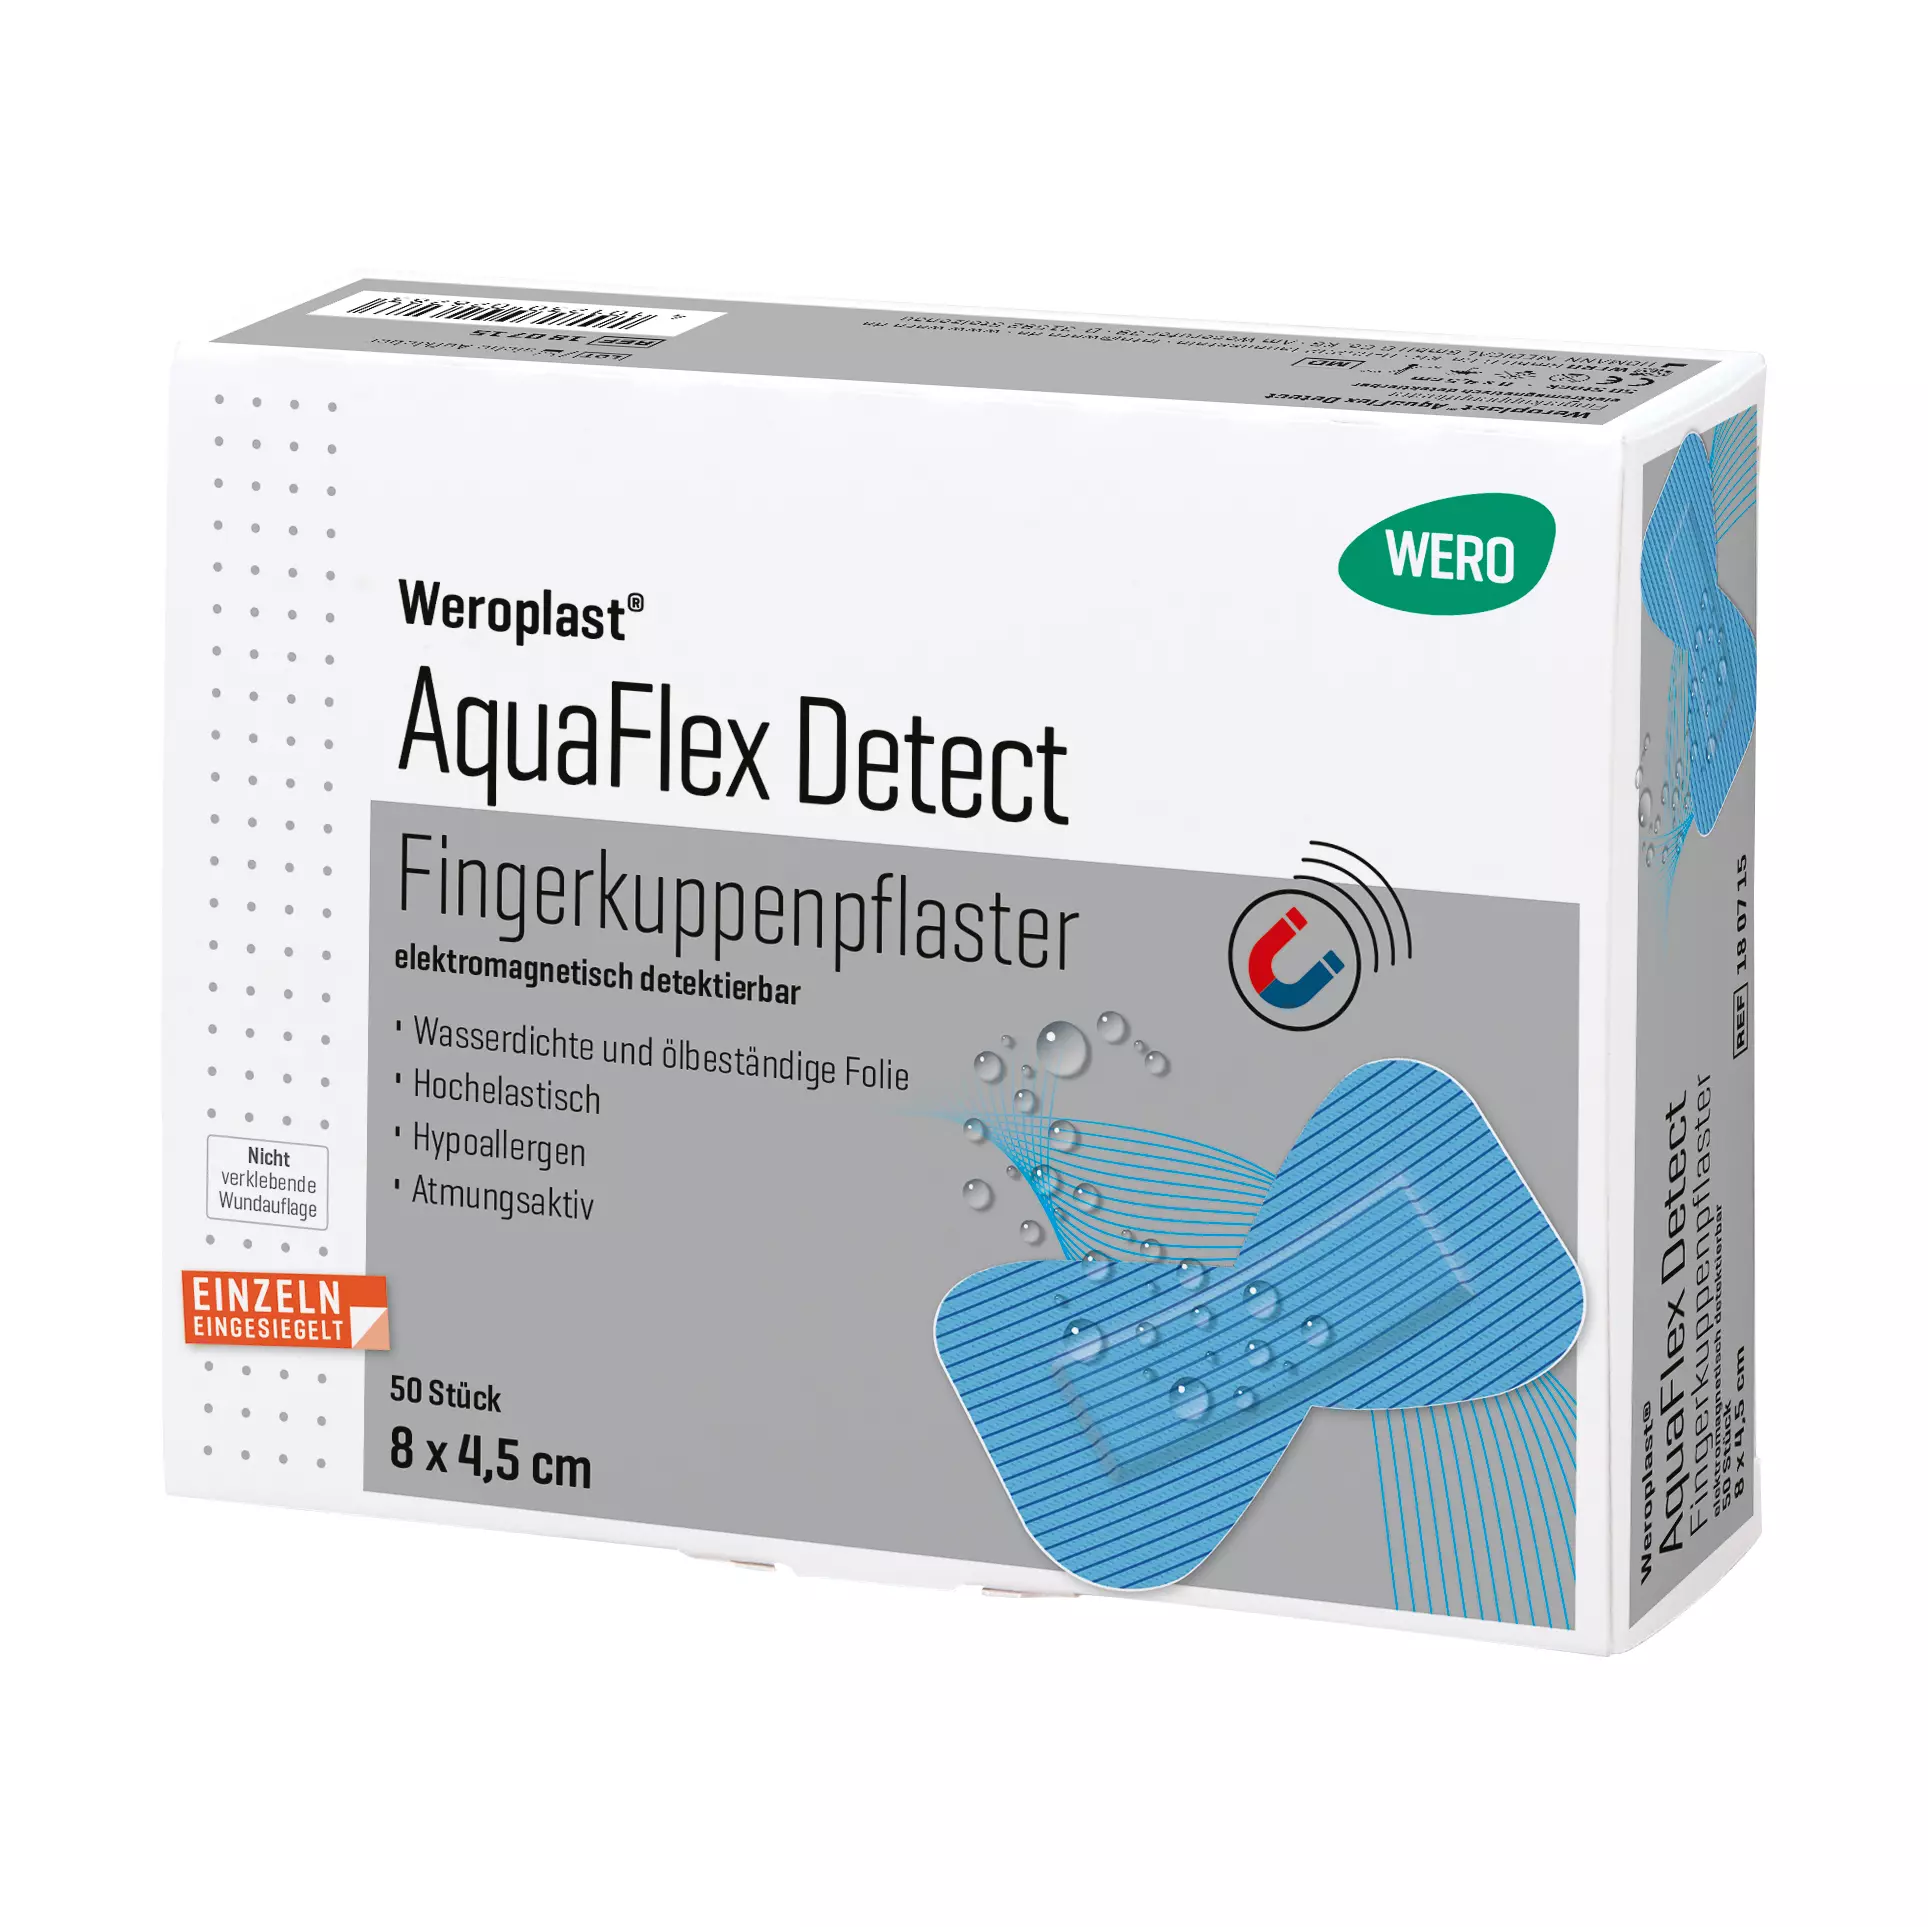 Fingerkuppenpflaster Weroplast® AquaFlex Detect, 50 Stk